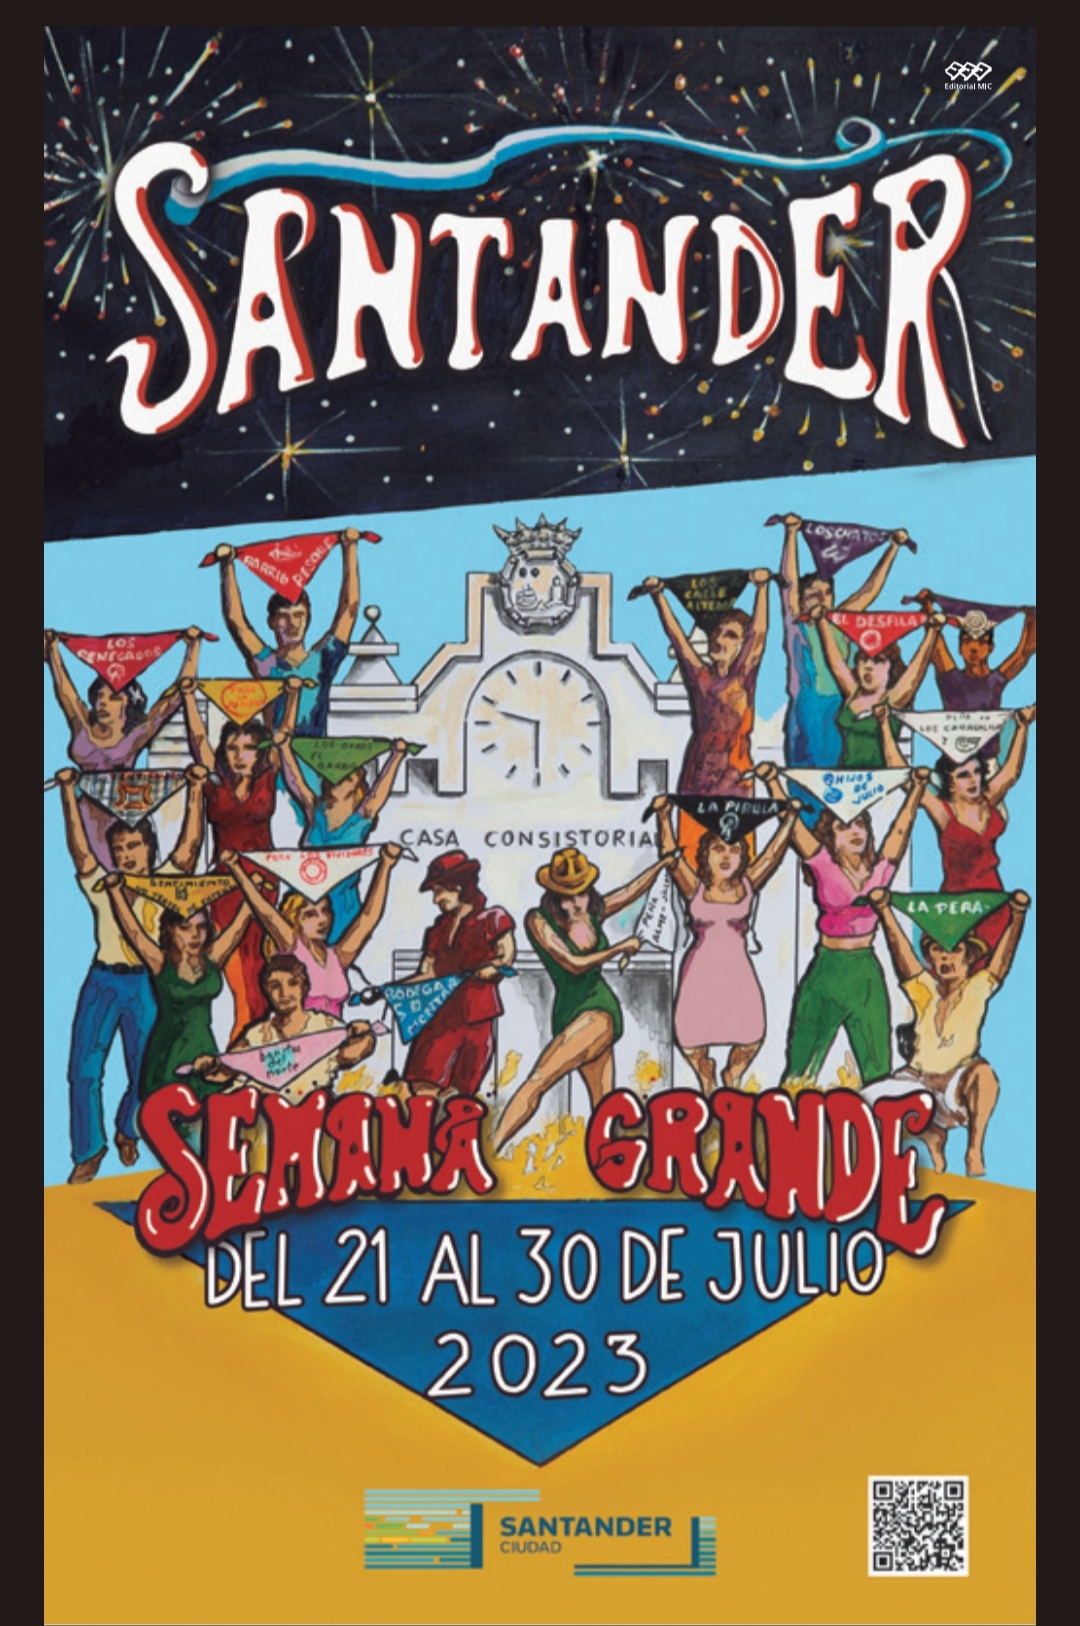 Semana Grande Santander 2023